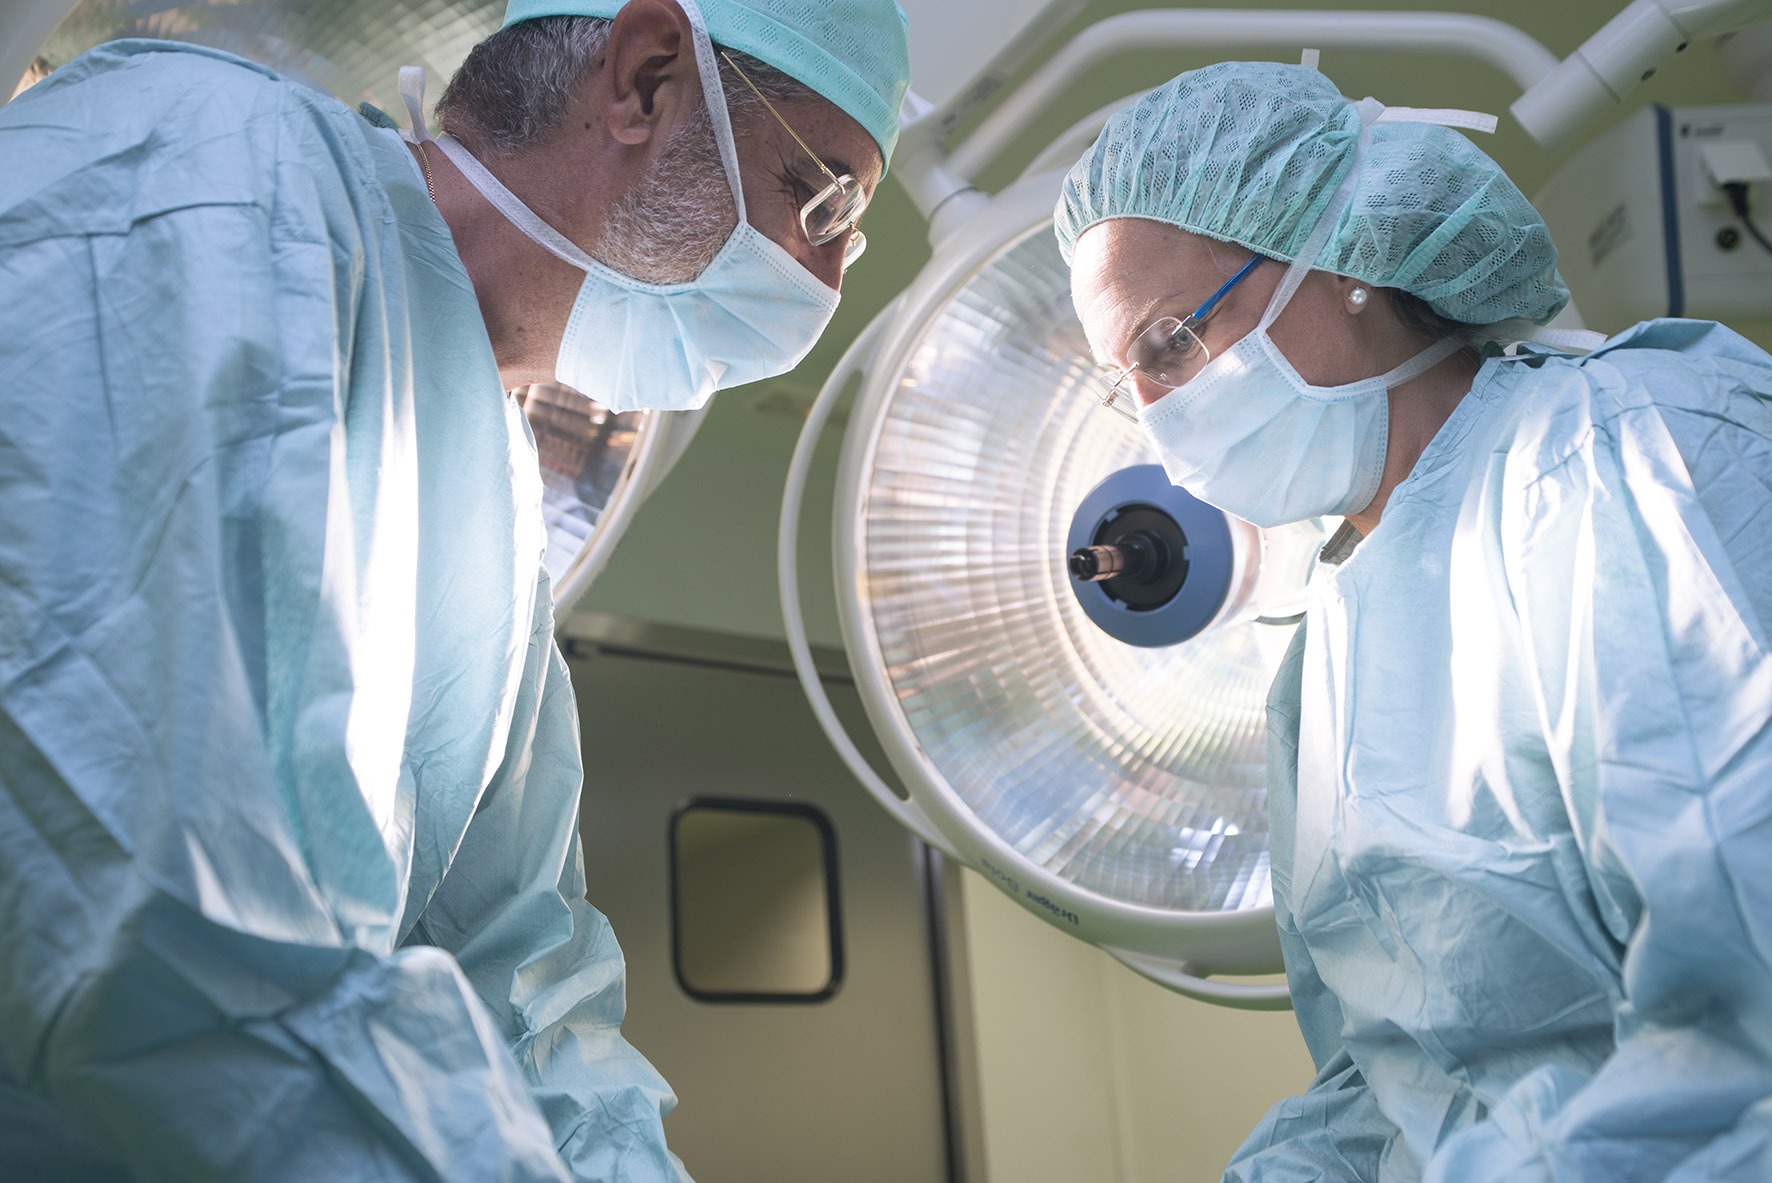 Doctors performing ambulatory surgery